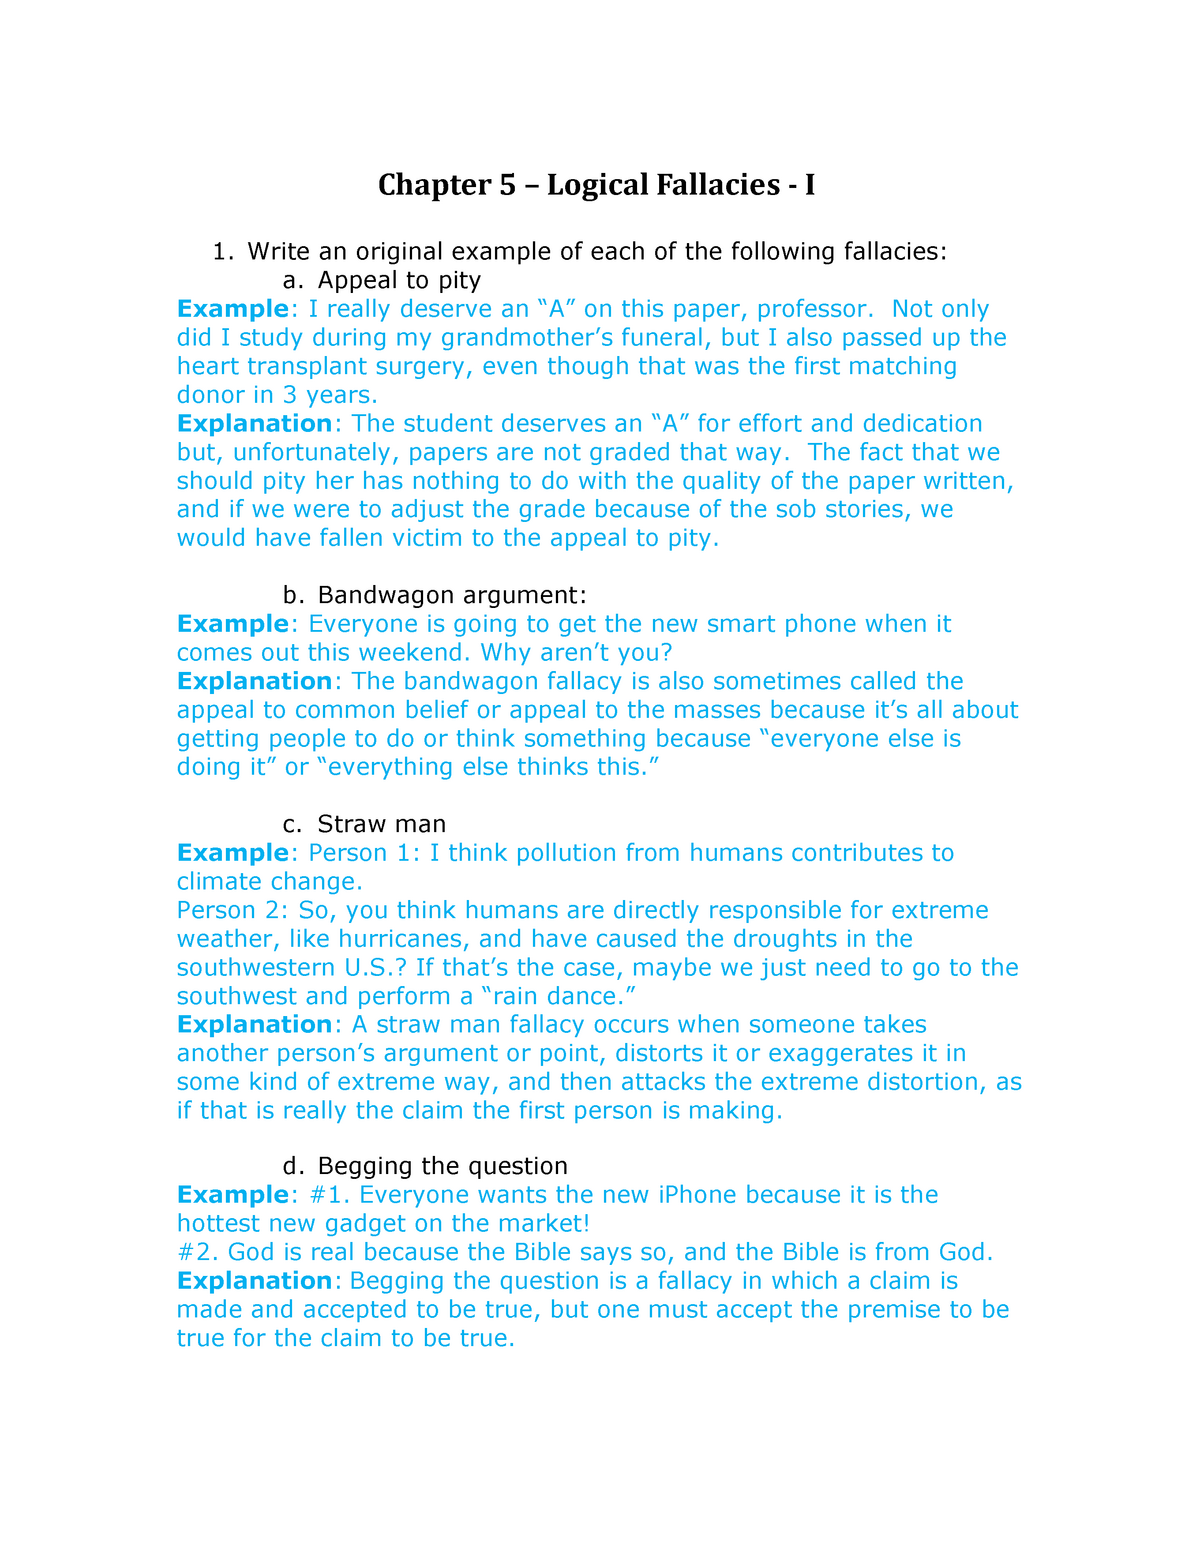 chapter-5-logical-fallacies-i-dn-chapter-5-logical-fallacies-i-write-an-original-example